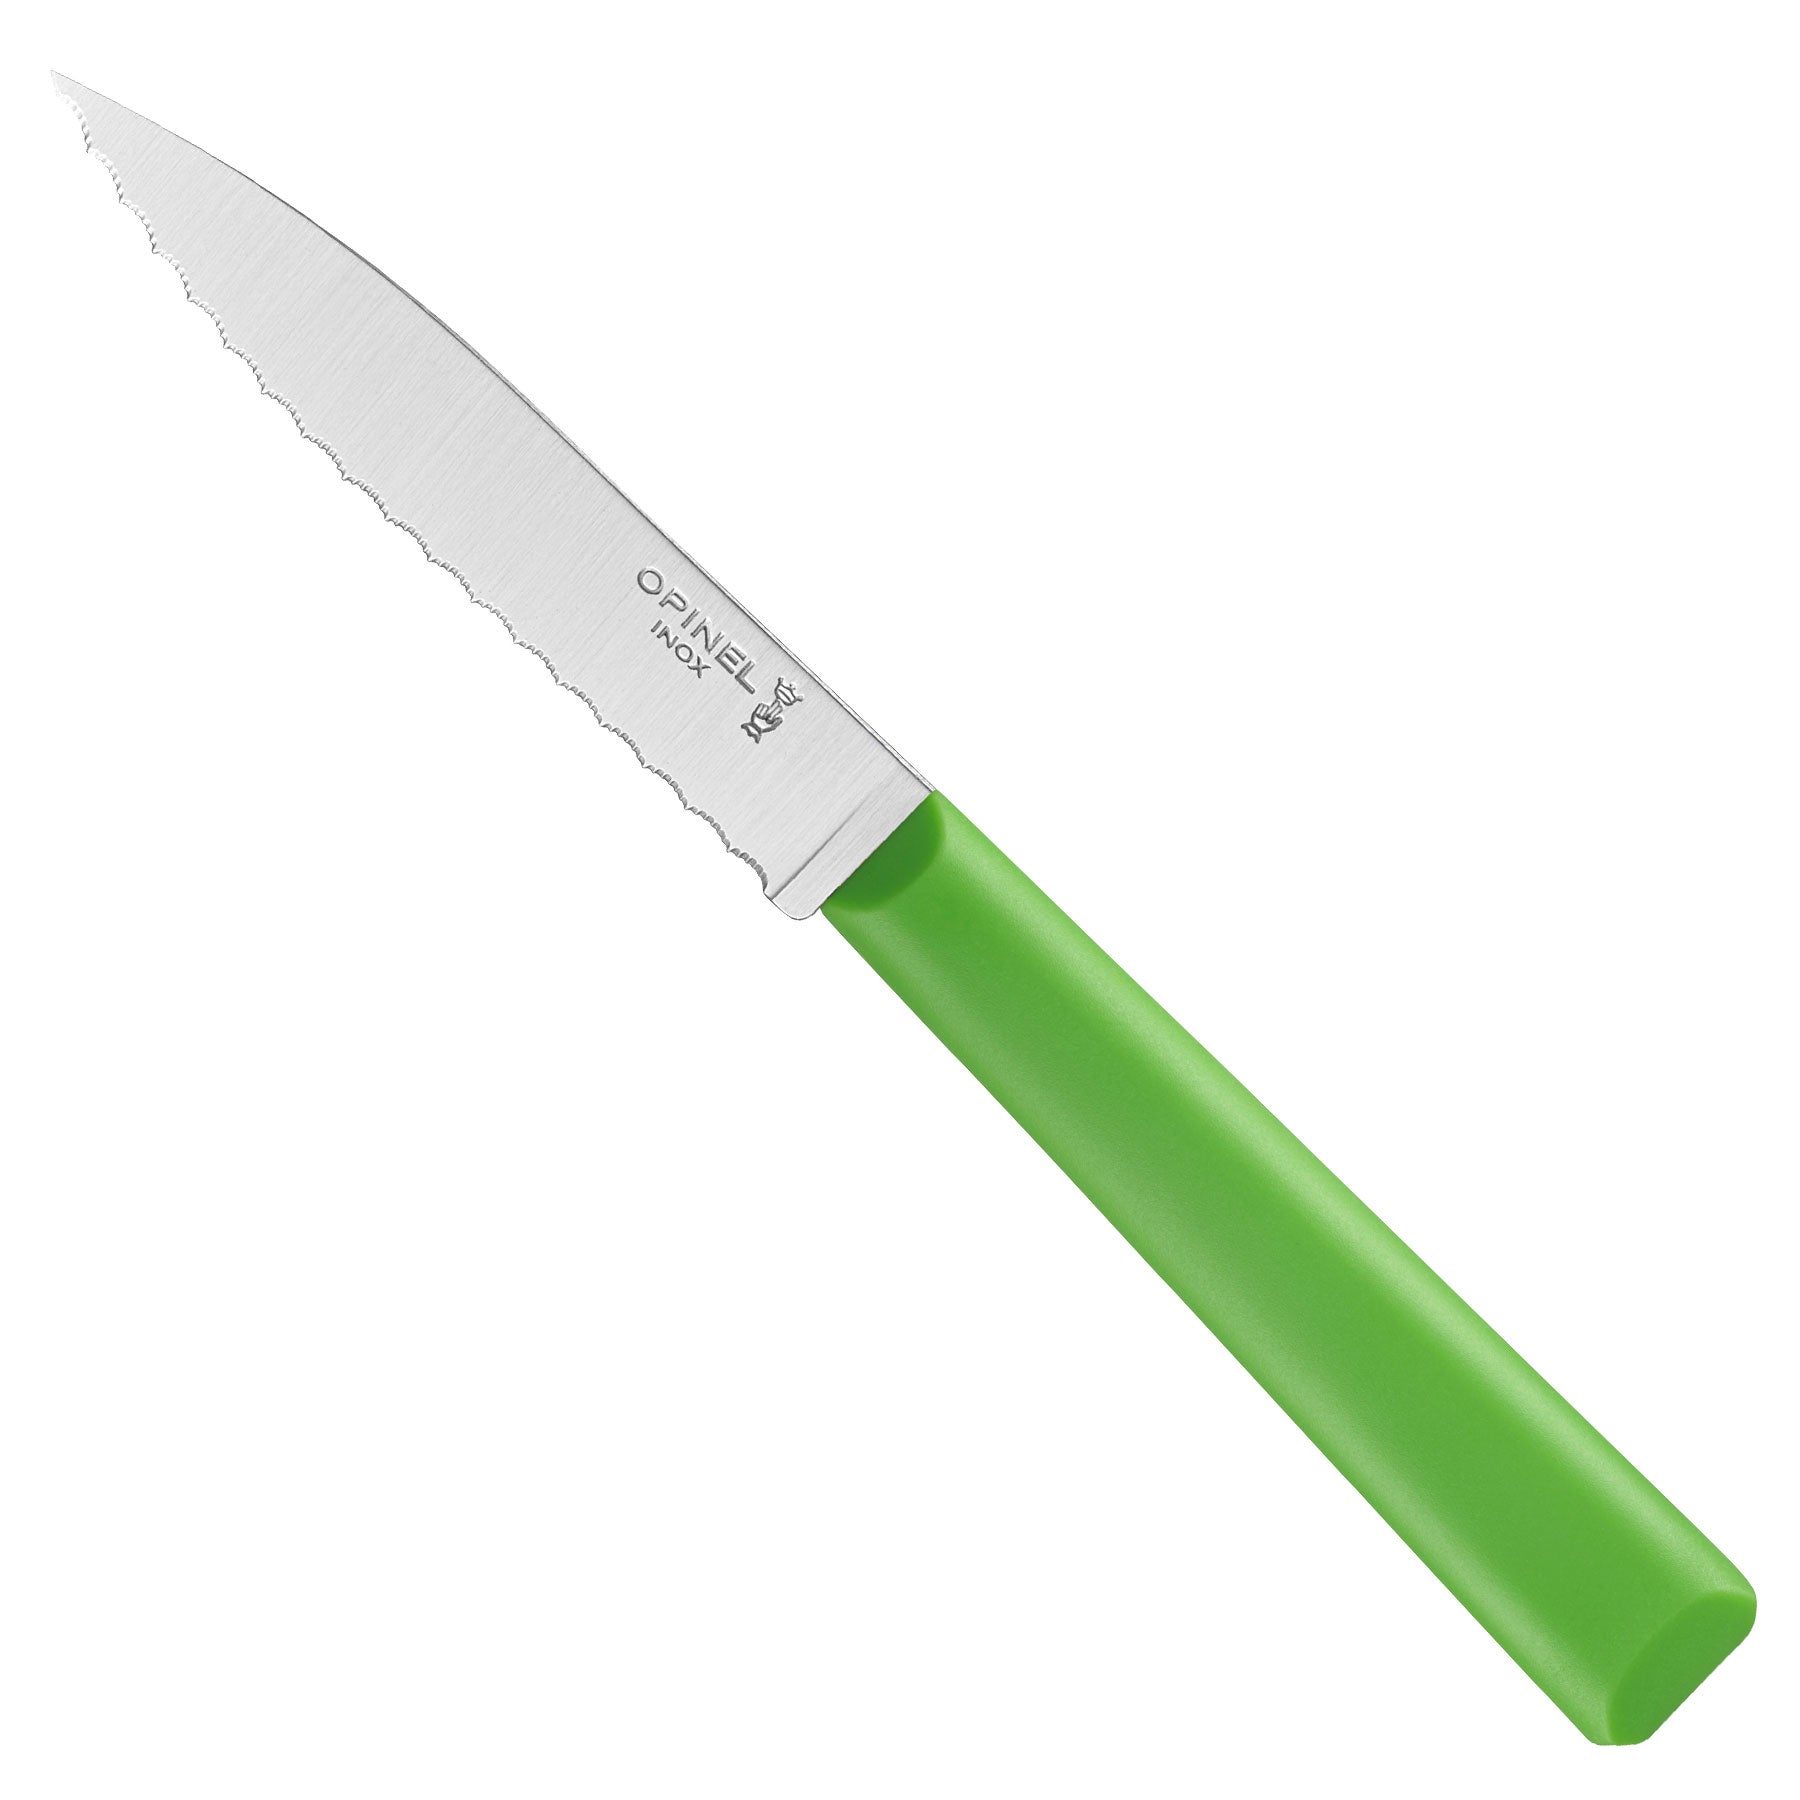 4 Serrated Knife Uses